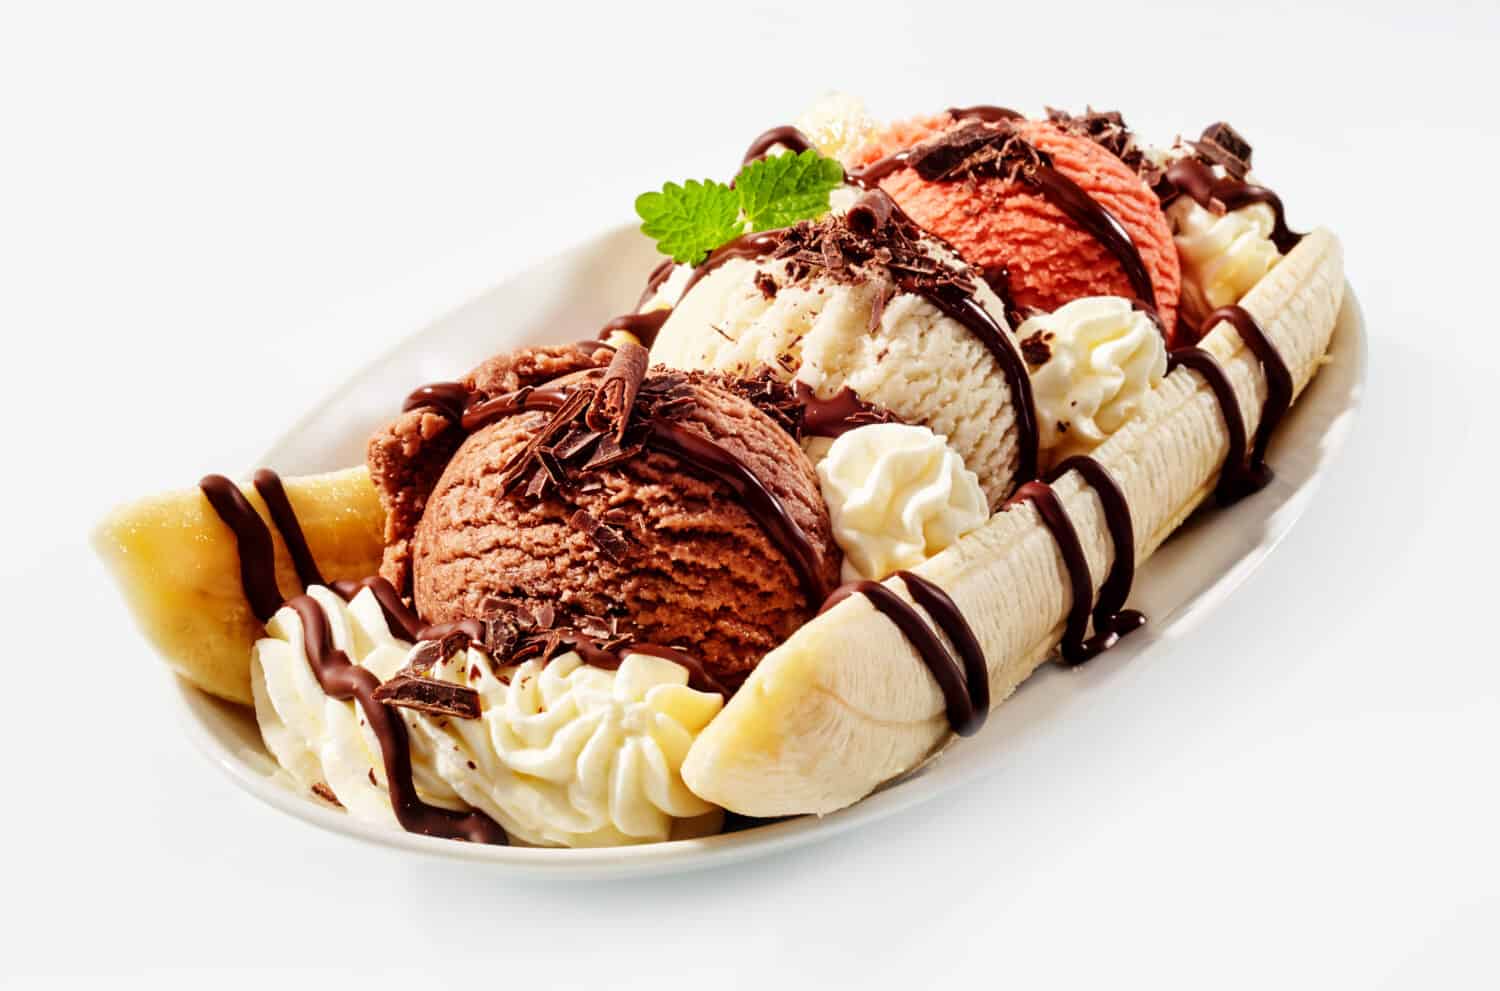 Banana split sundae ice cream in a bowl with strawberry and raspberry vanilla icecream scoops